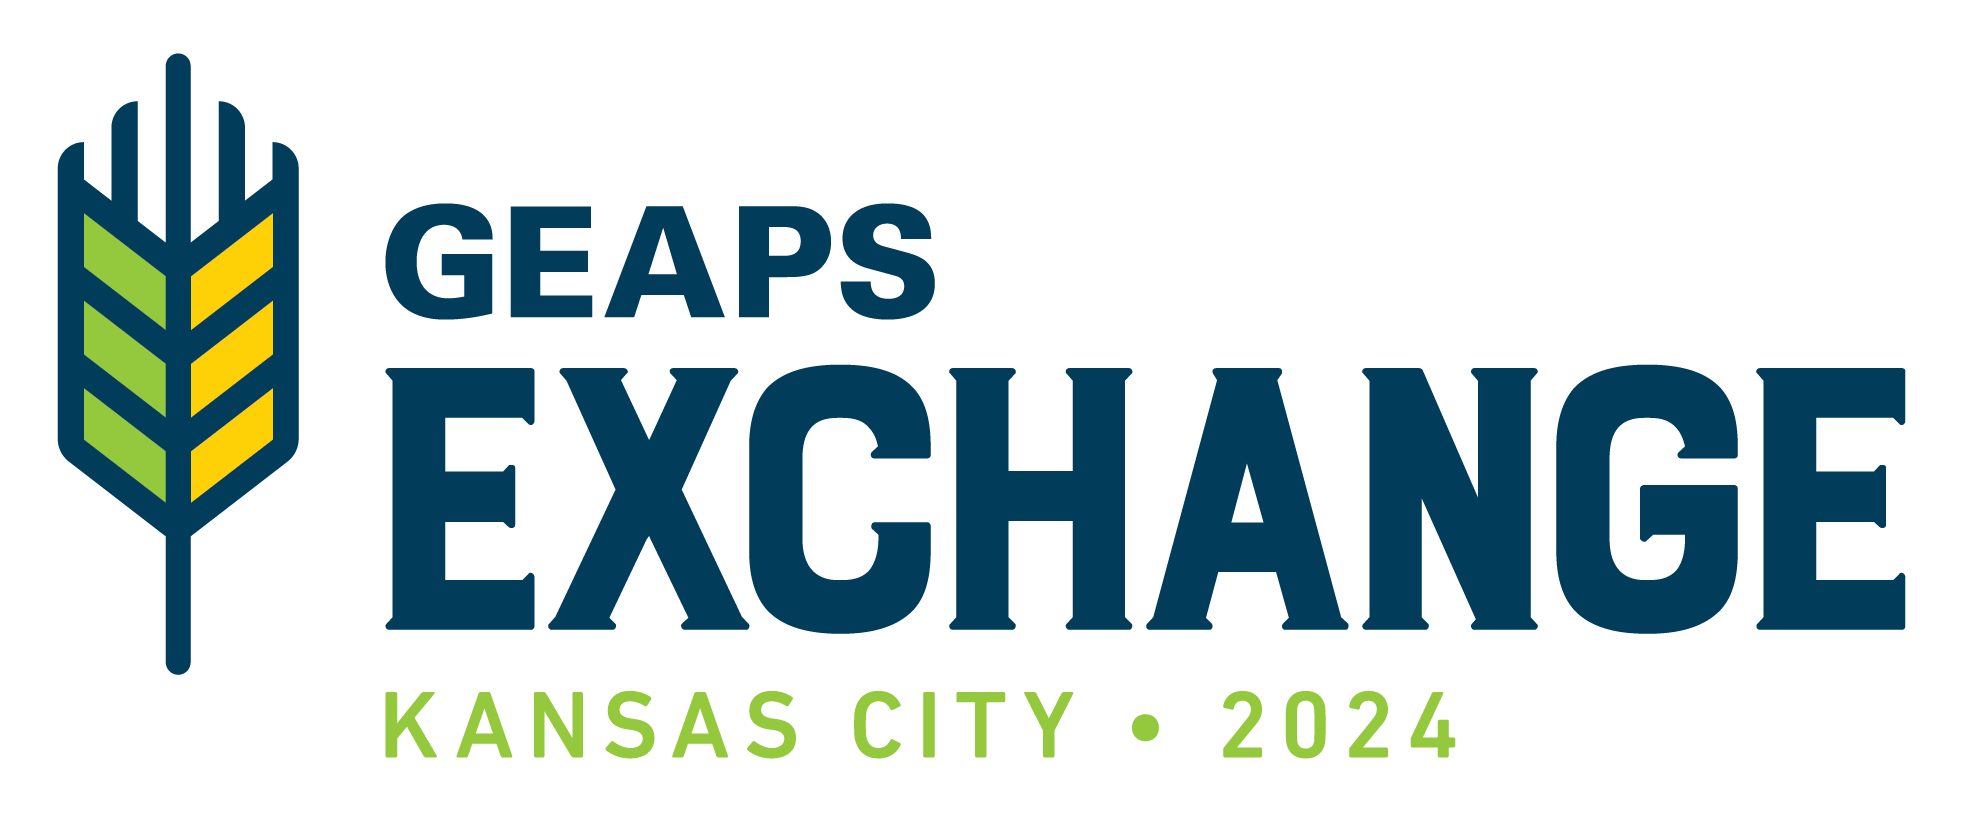 GEAPS Exchange